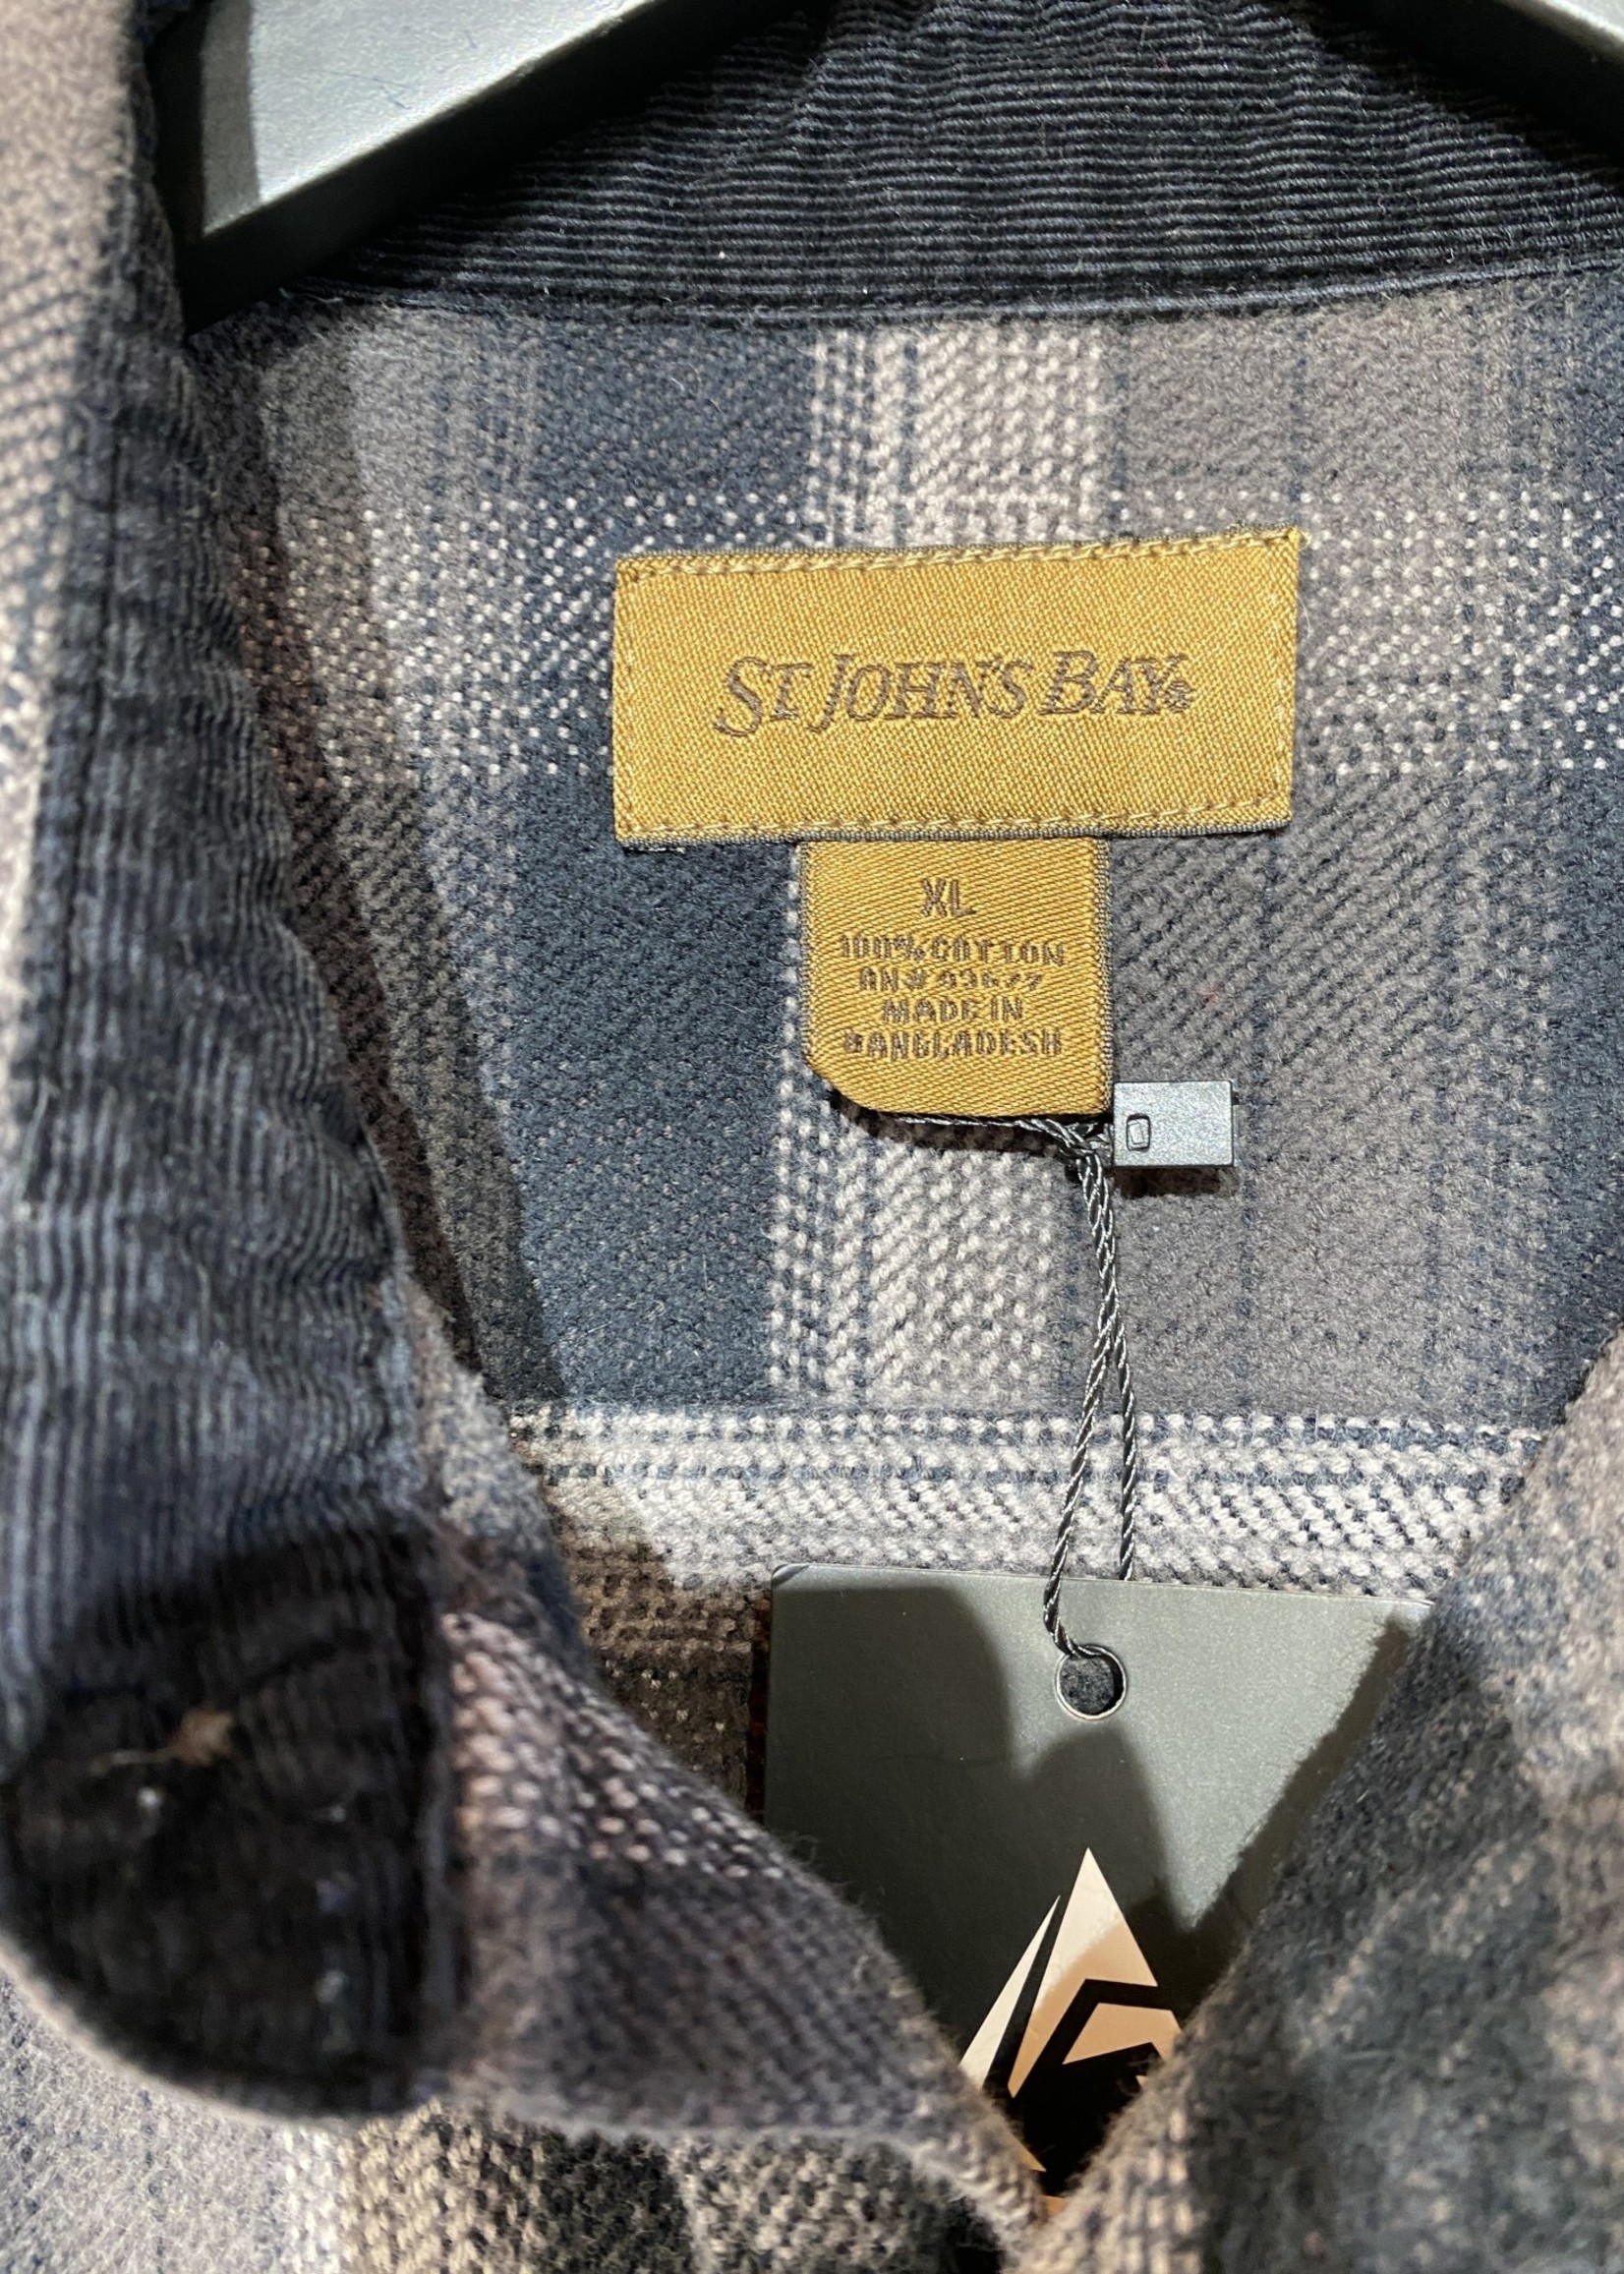 ST John Bay's Black Grey Flannel XL